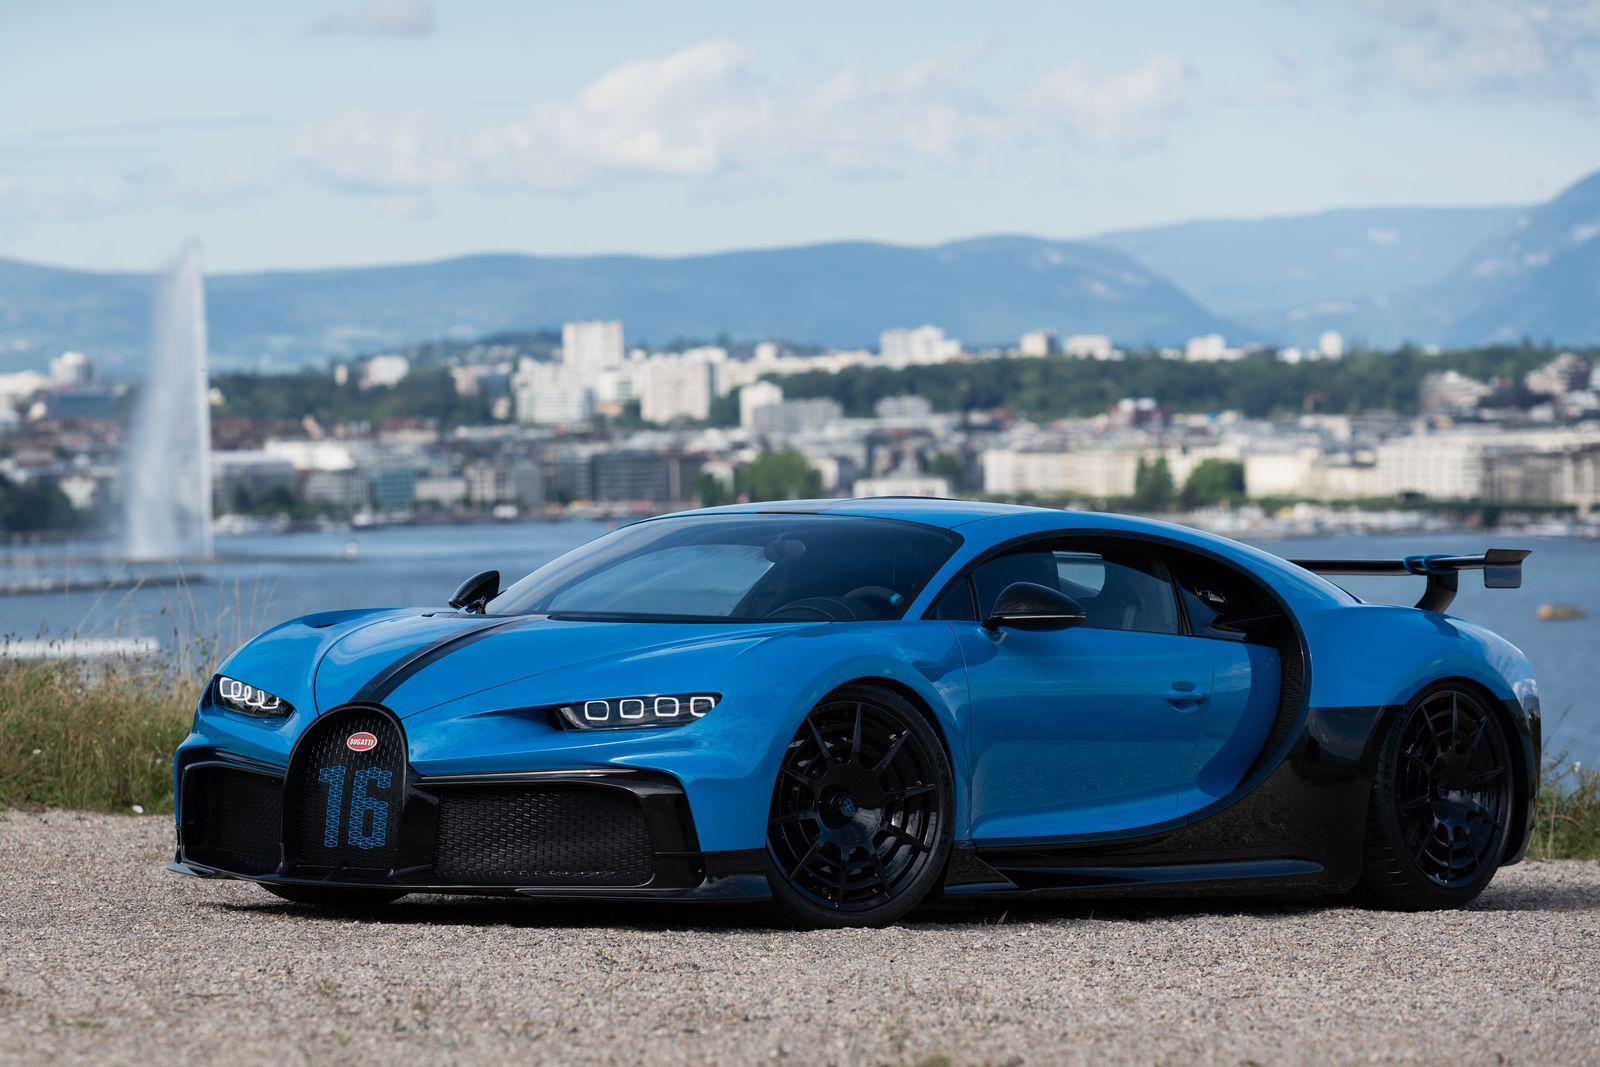 The Bugatti Chiron Pur Sport arrived in Geneva